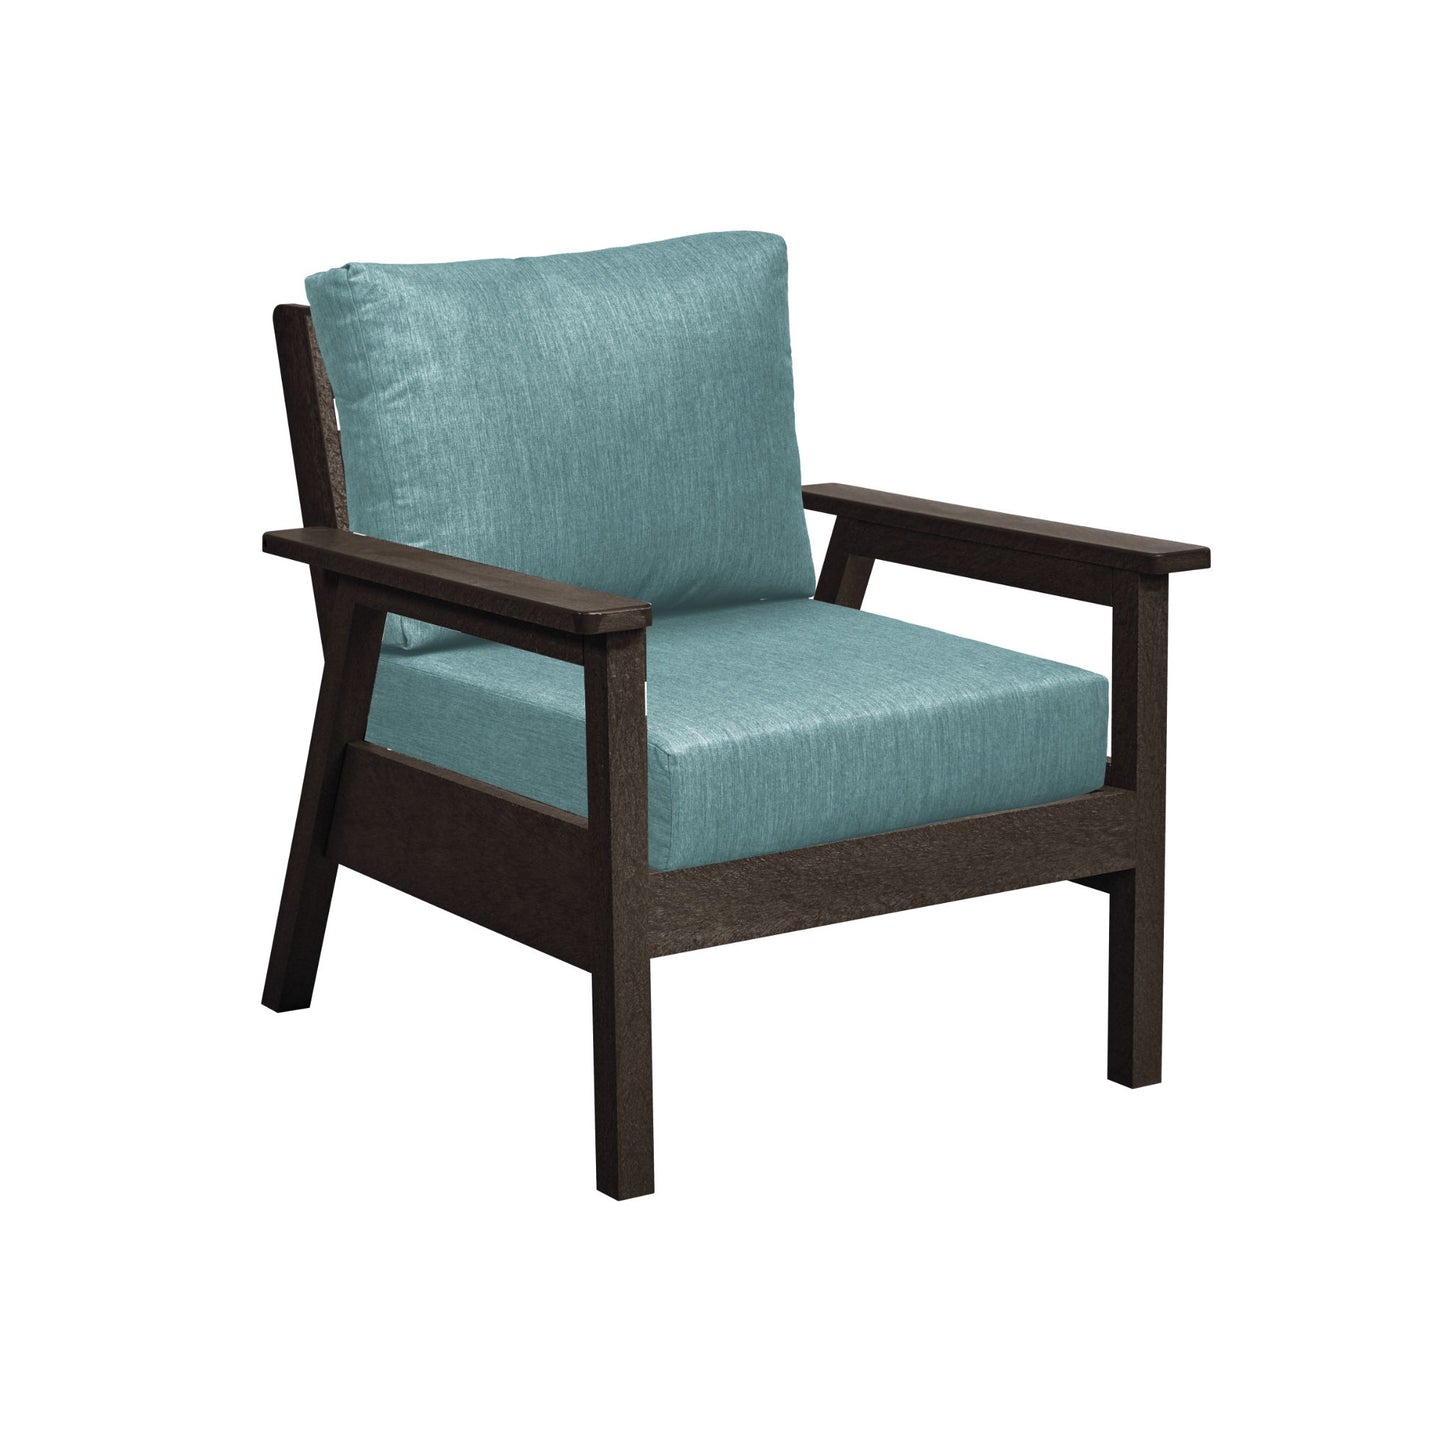 CR Plastics Tofino Club Chair with Cushions